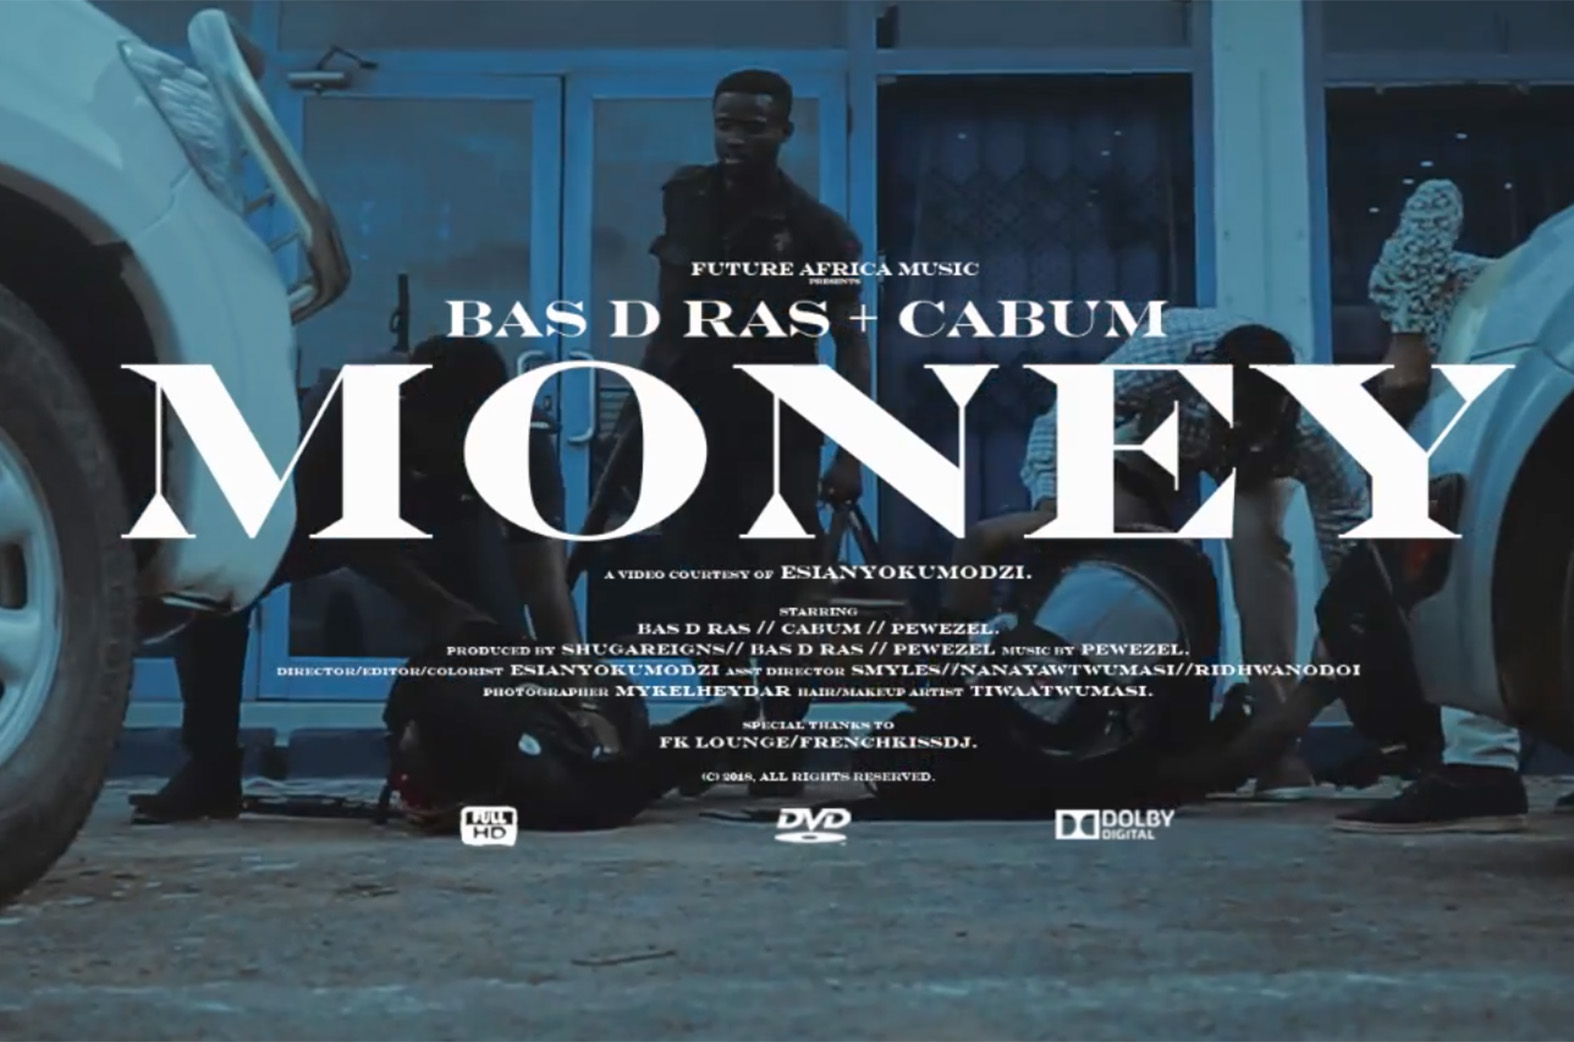 Video: Money by Bas D Ras feat. Cabum